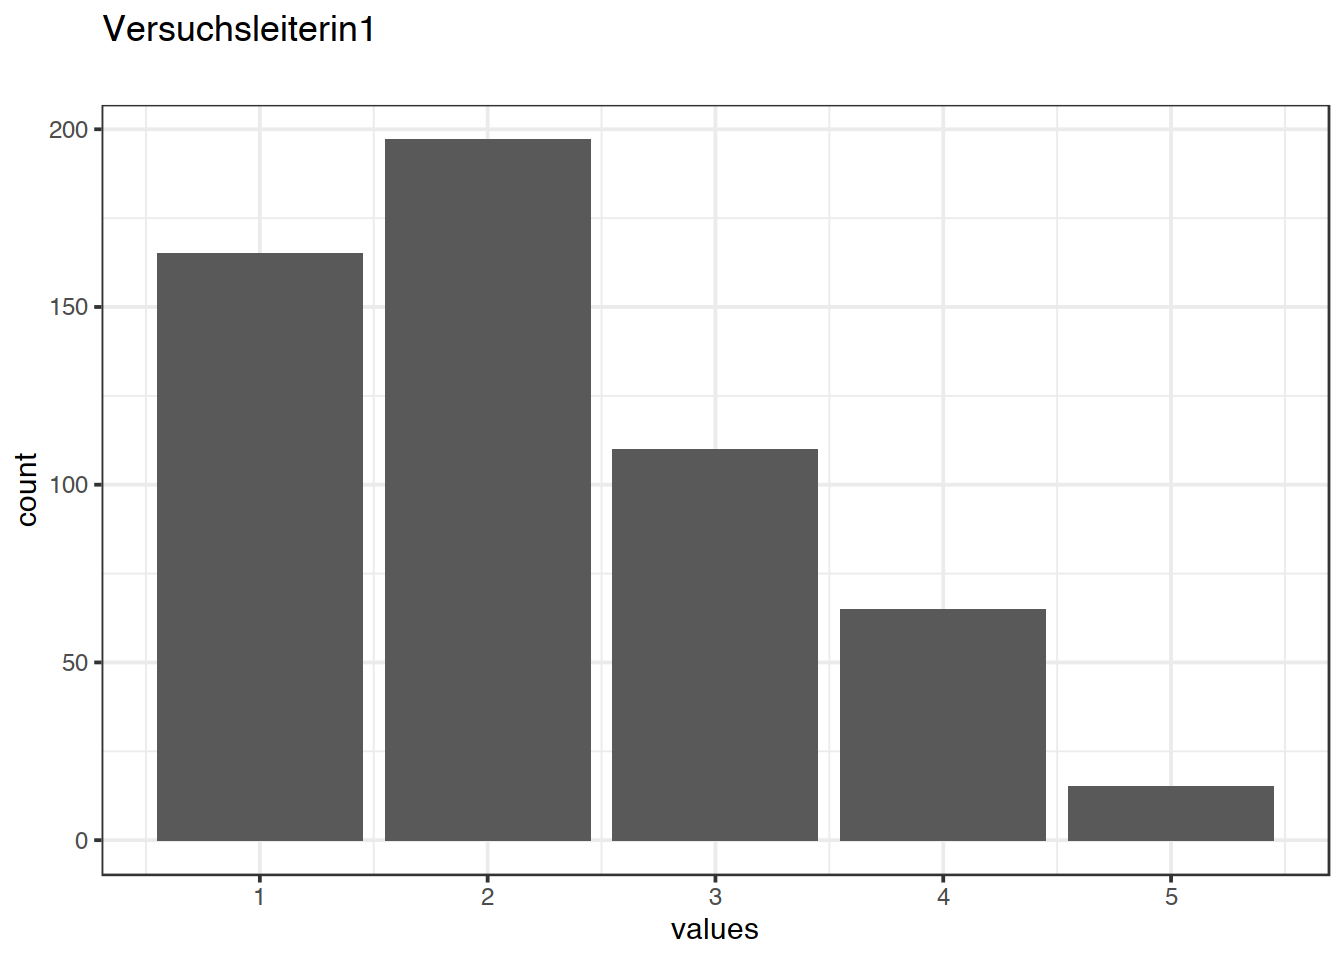 Distribution of values for Versuchsleiterin1